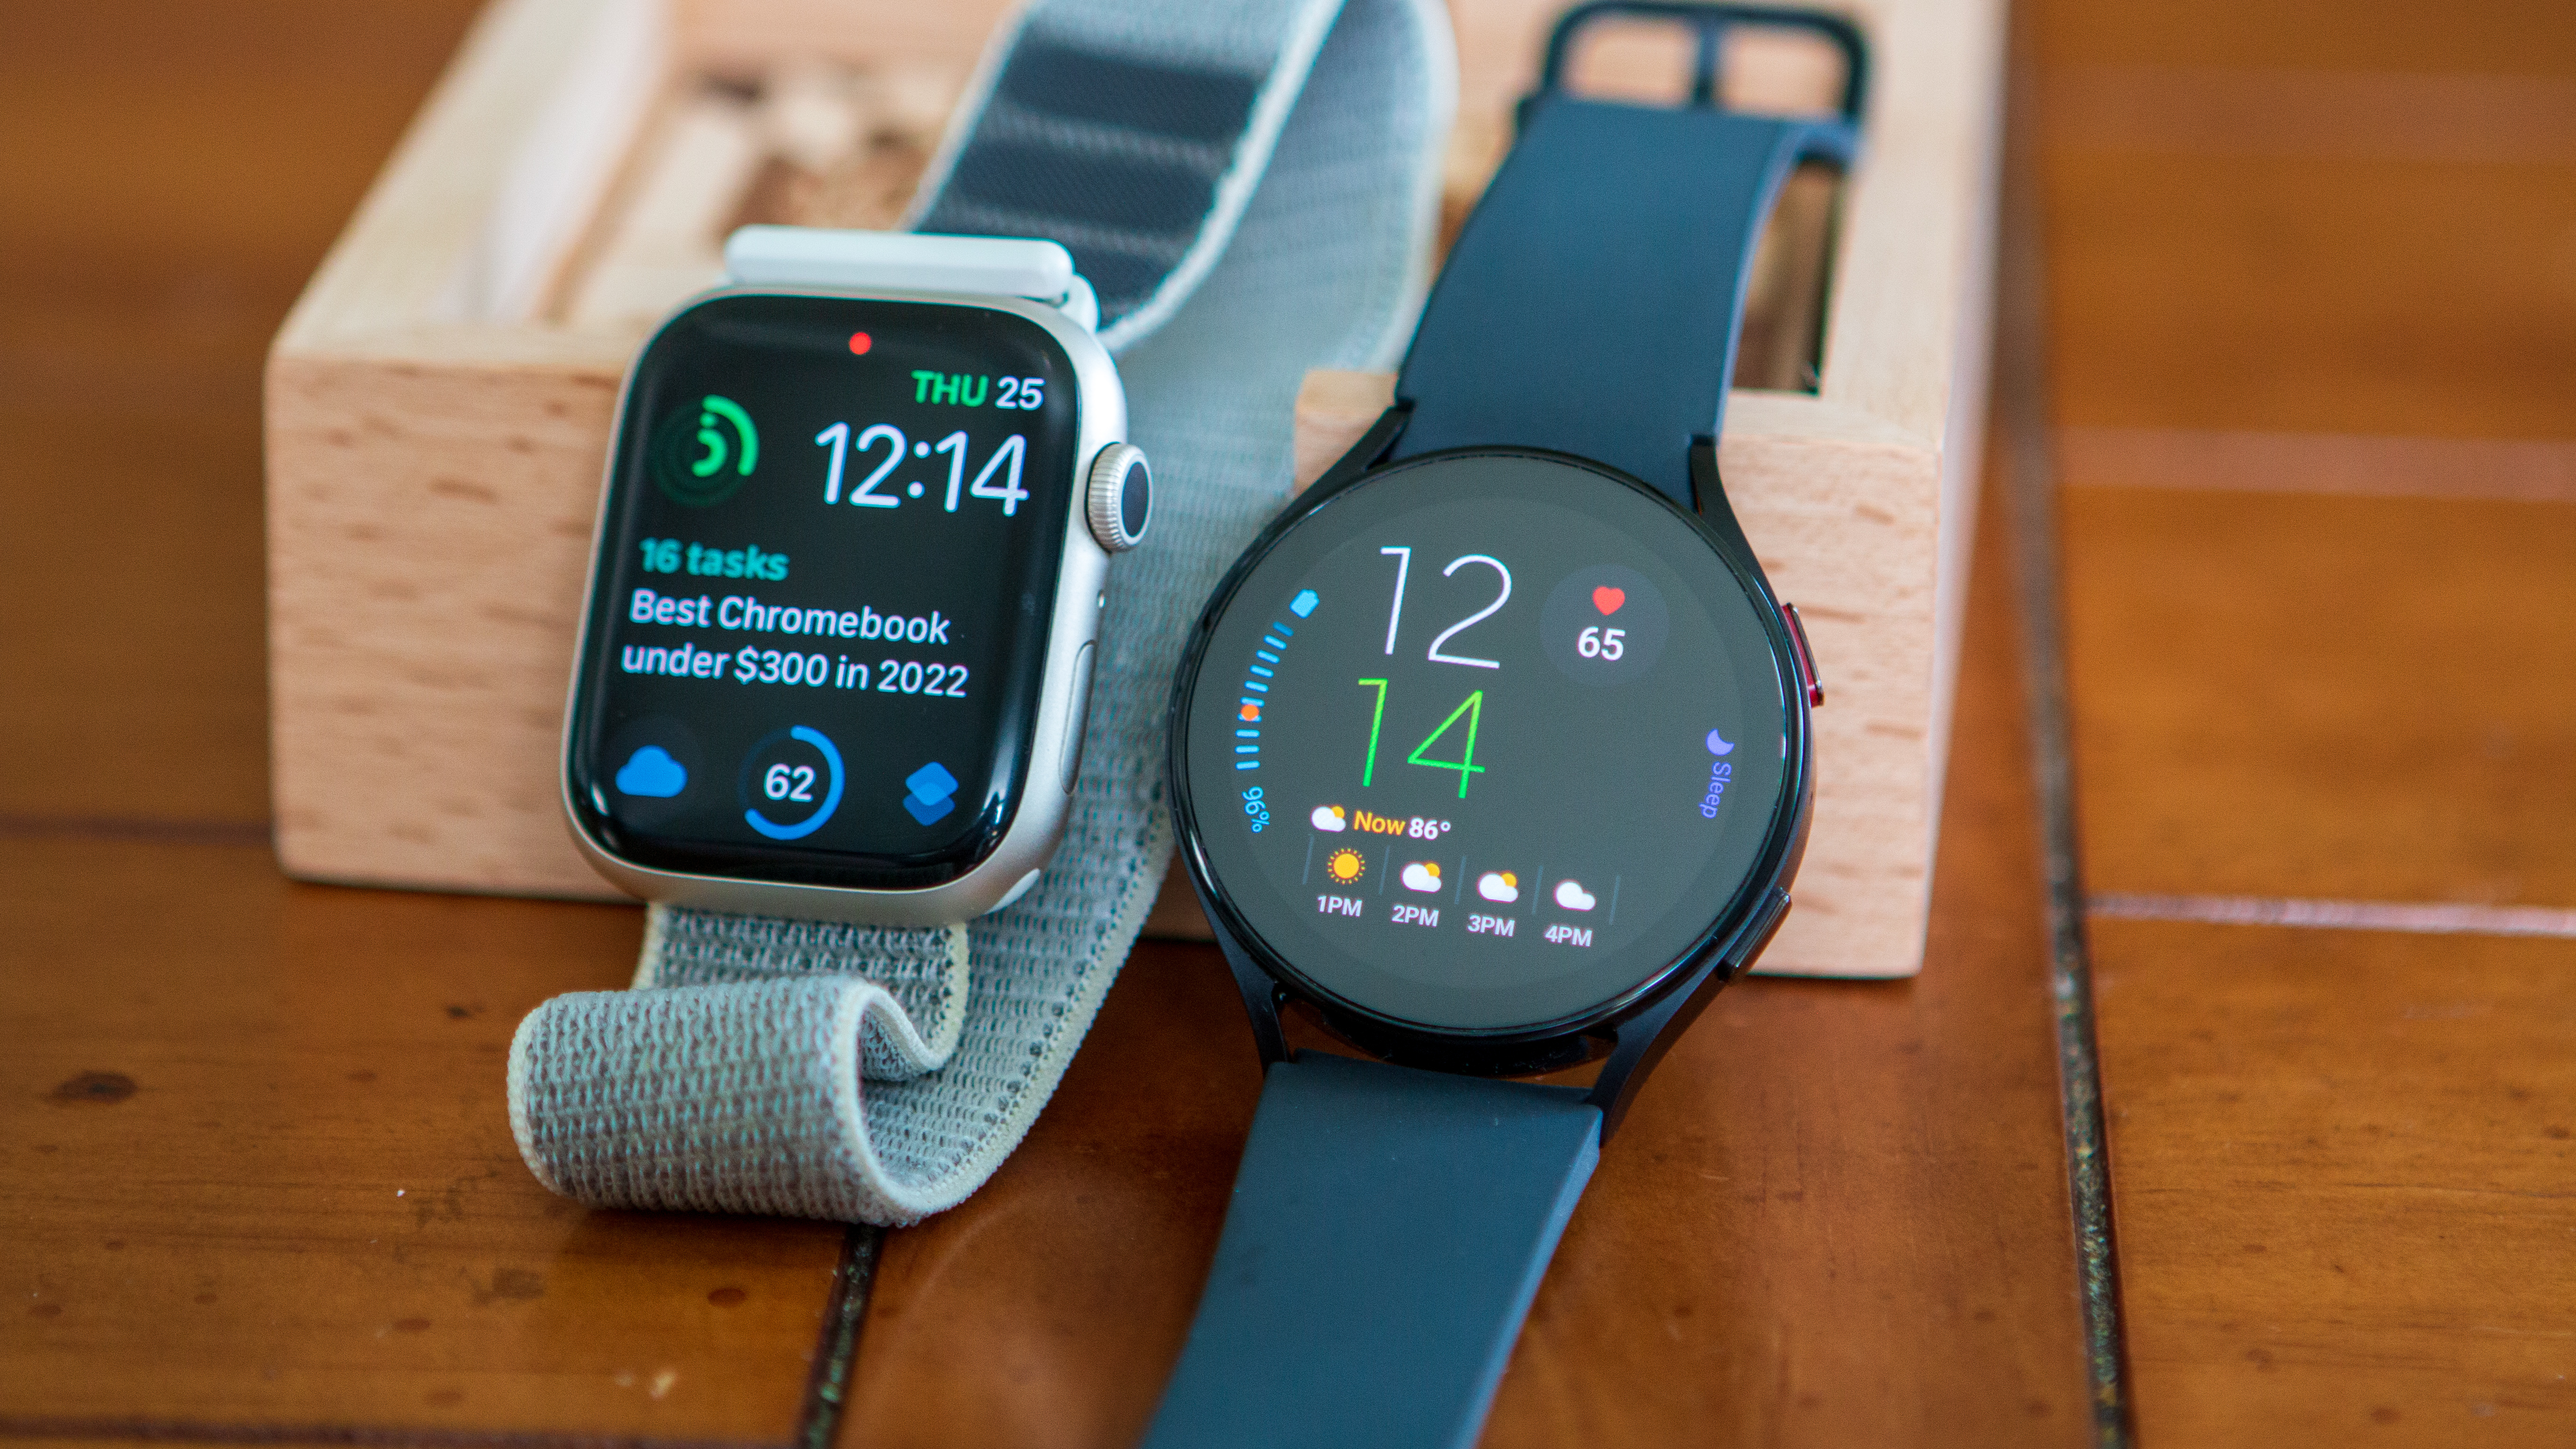 Samsung Galaxy Watch review: A worthy Apple Watch alternative - CNET